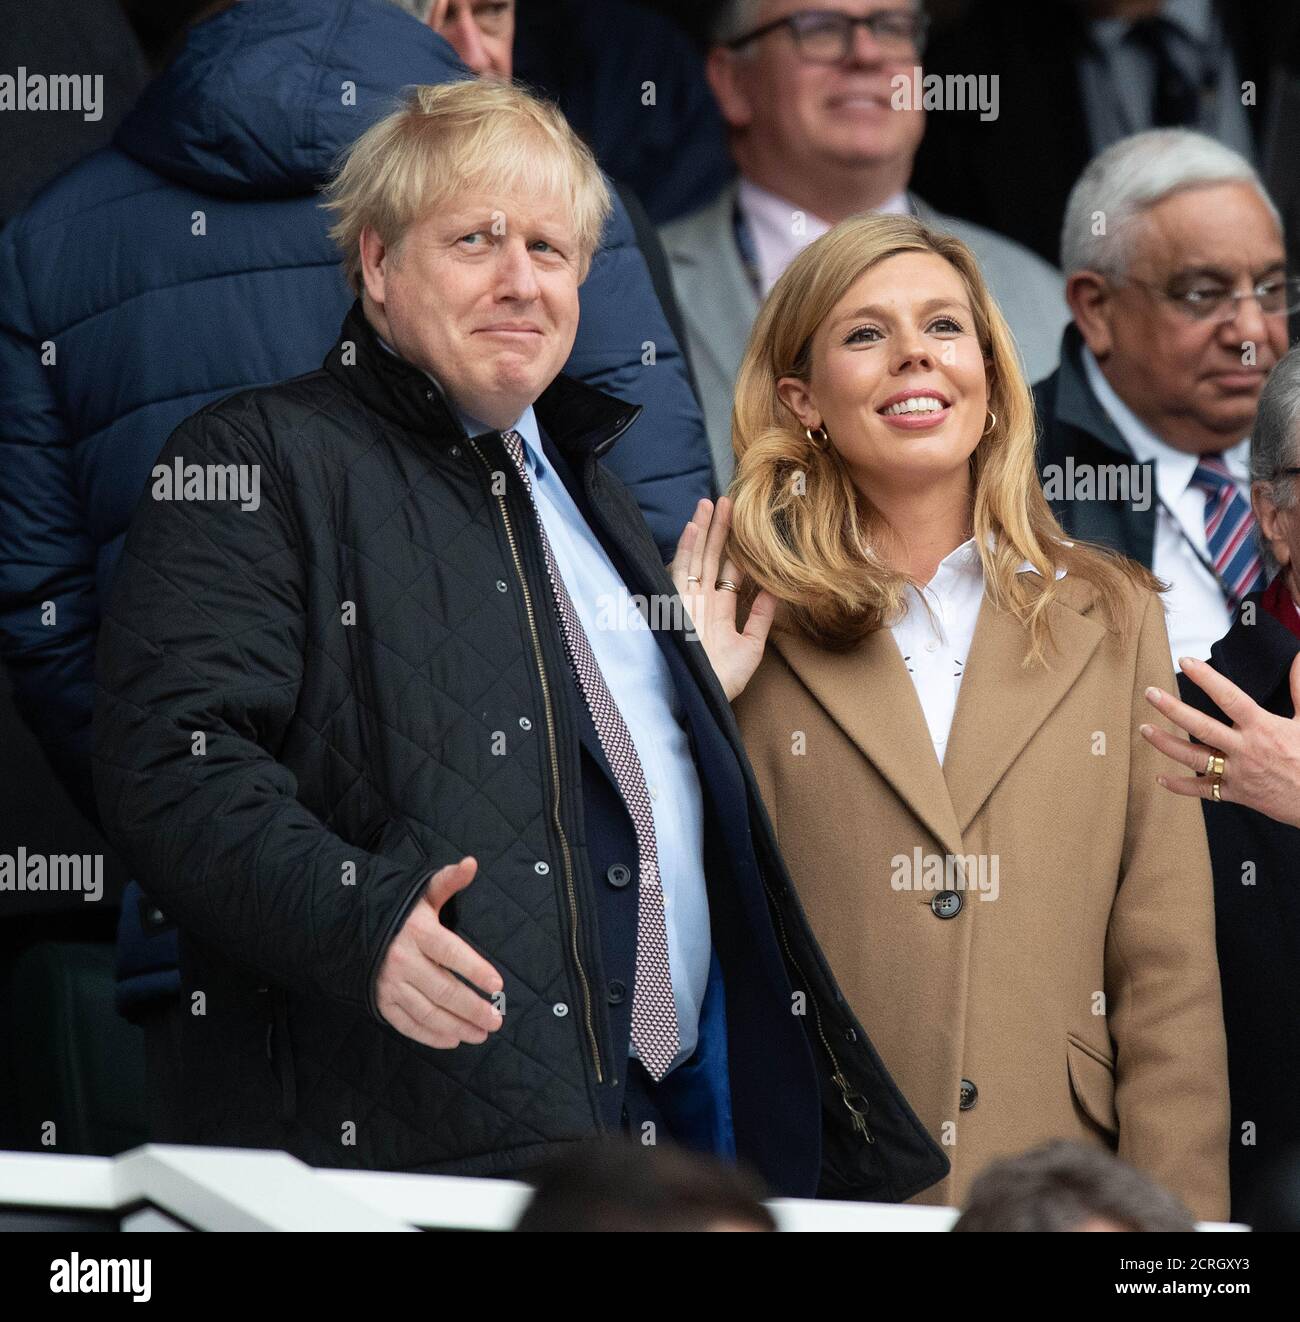 Prime Minister Boris Johnson and fiance Carrie Symonds at Twickenham. England v Wales. 7/3/2020.  PHOTO CREDIT : © MARK PAIN / ALAMY STOCK PHOTO Stock Photo